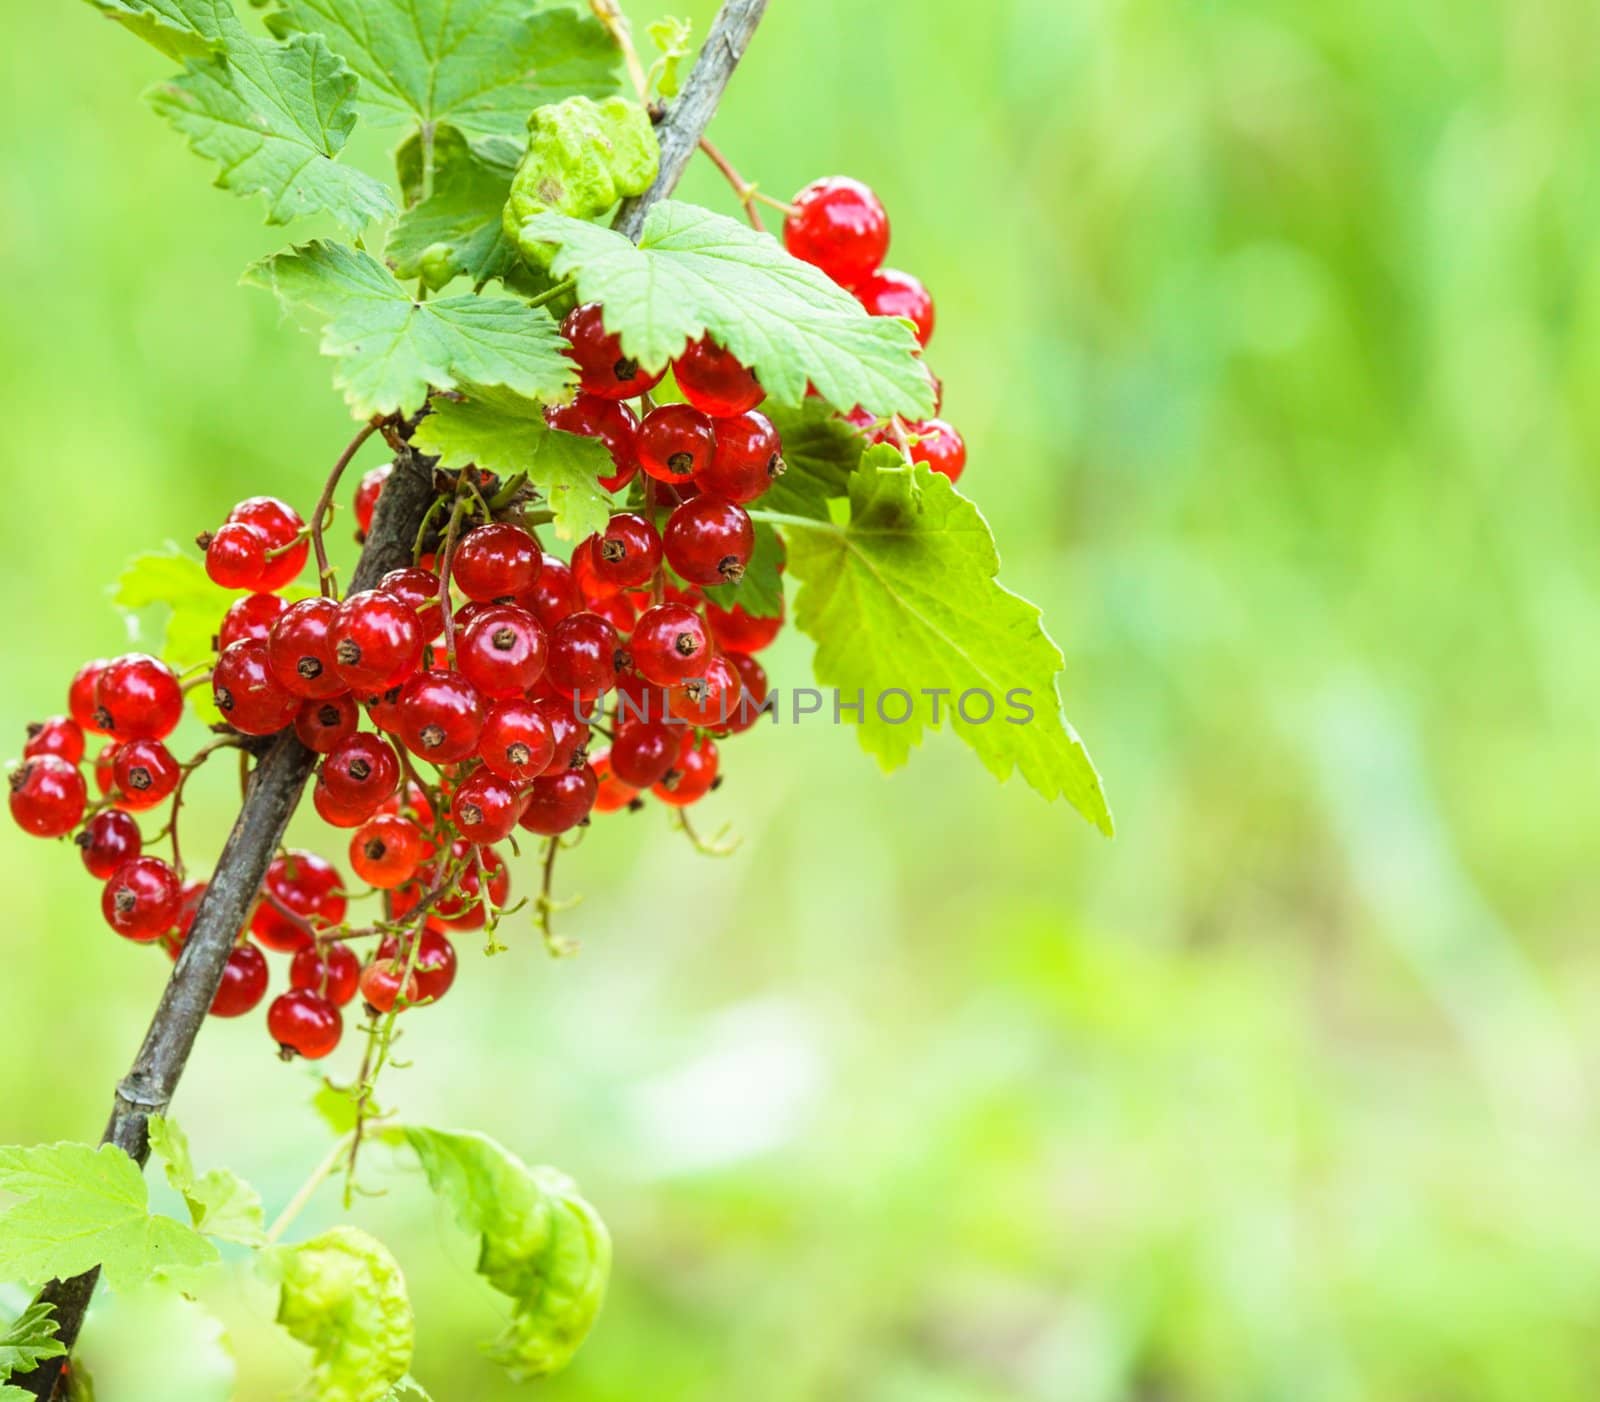 Red currant bush - closeup the berries